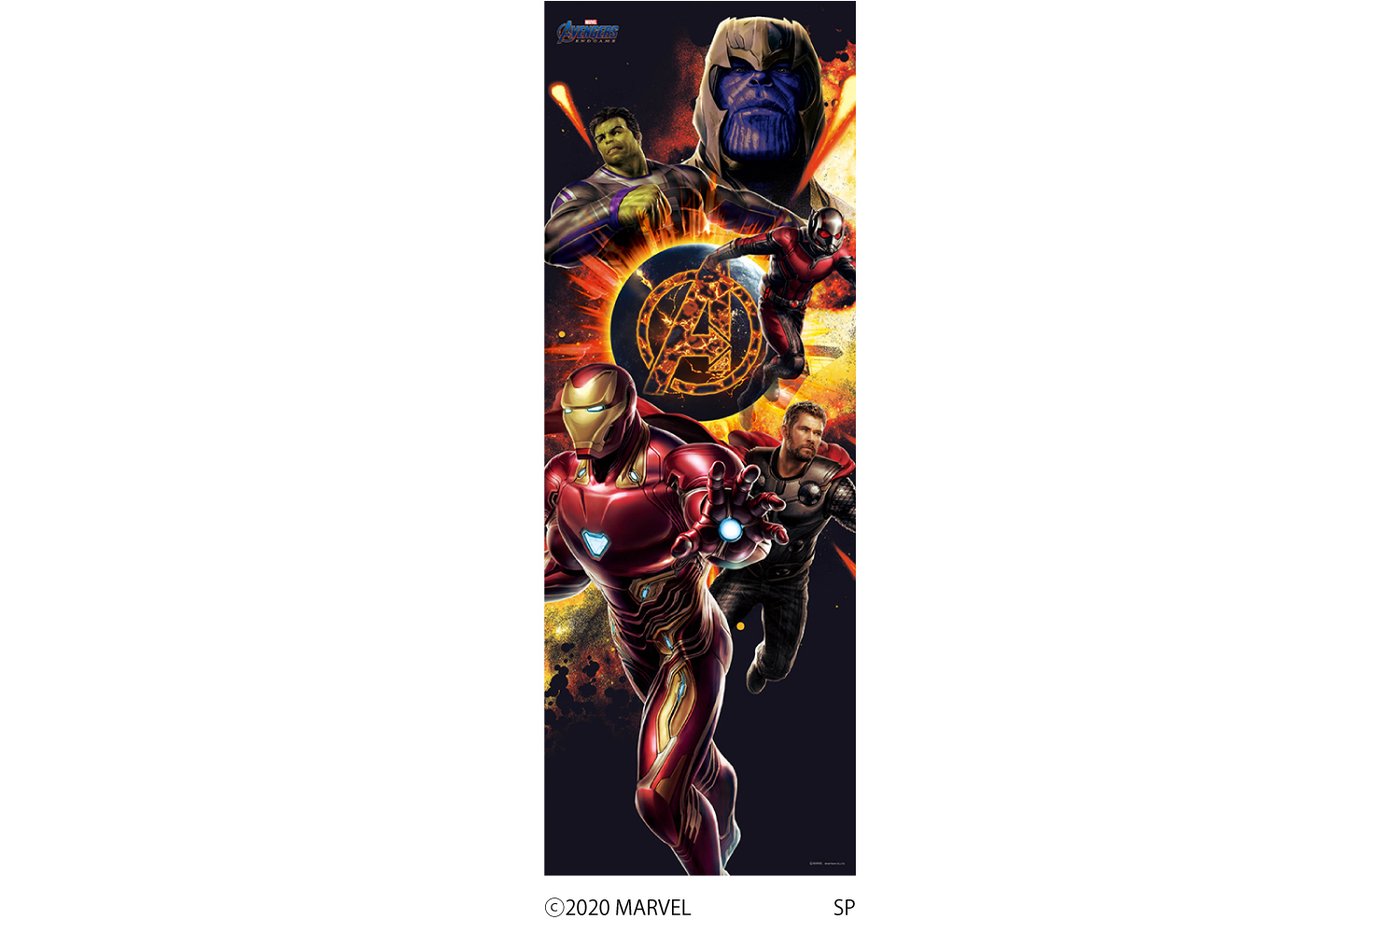 Marvel マーベル Avengers Endgame 壁紙もとウォールステッカー 2場席タイプライター アイアンマン ハルク Wall Paper M019 2 プリテック Earthkitchen Ph